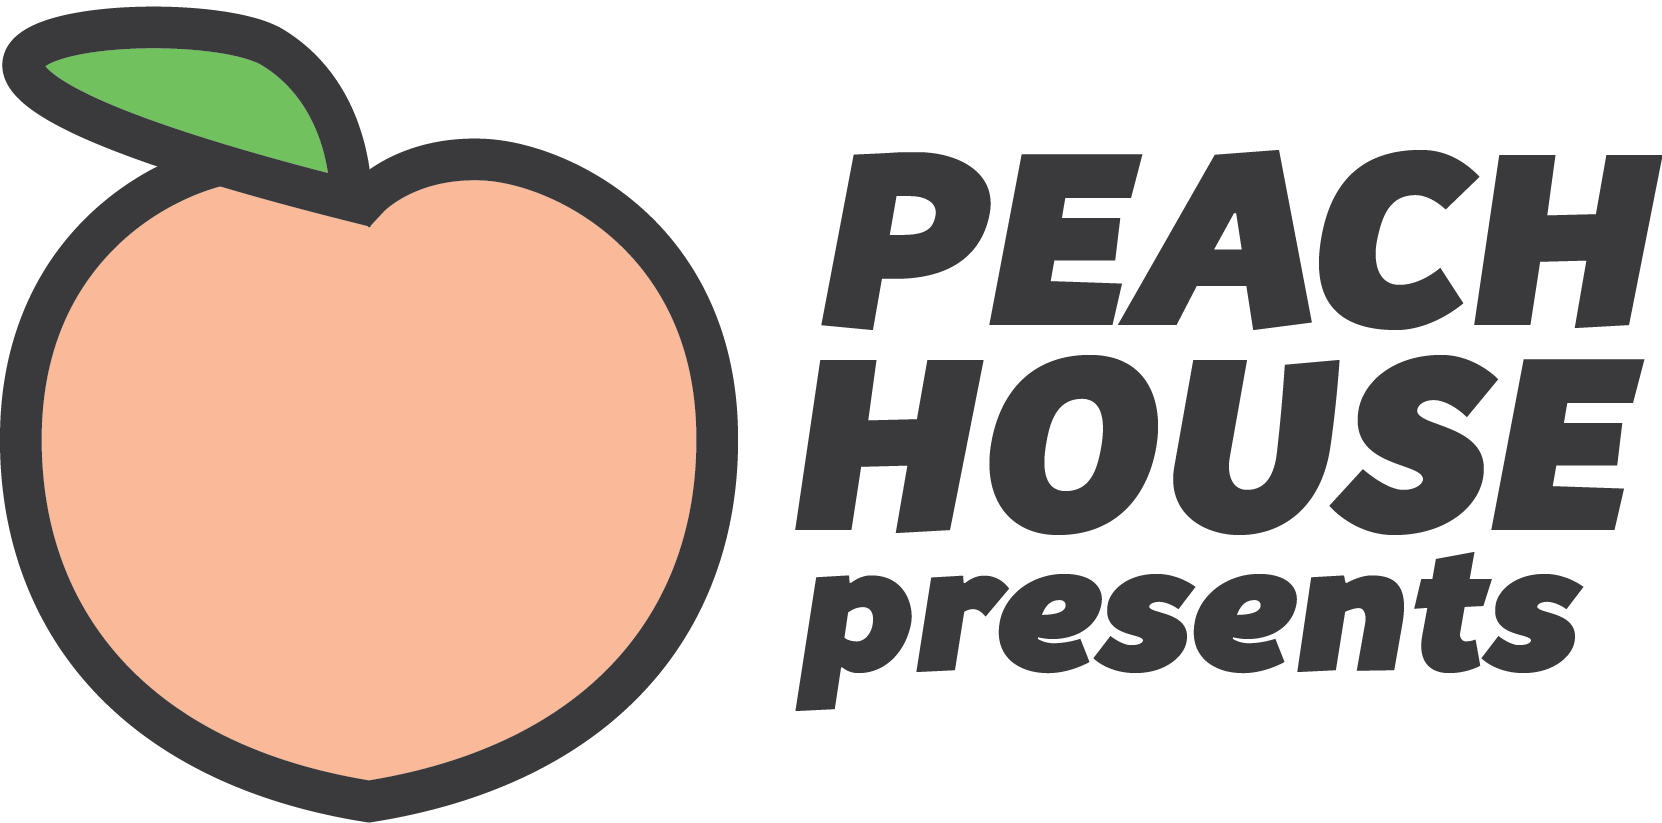 Free Free 55 Princess Peach Logo Svg SVG PNG EPS DXF File